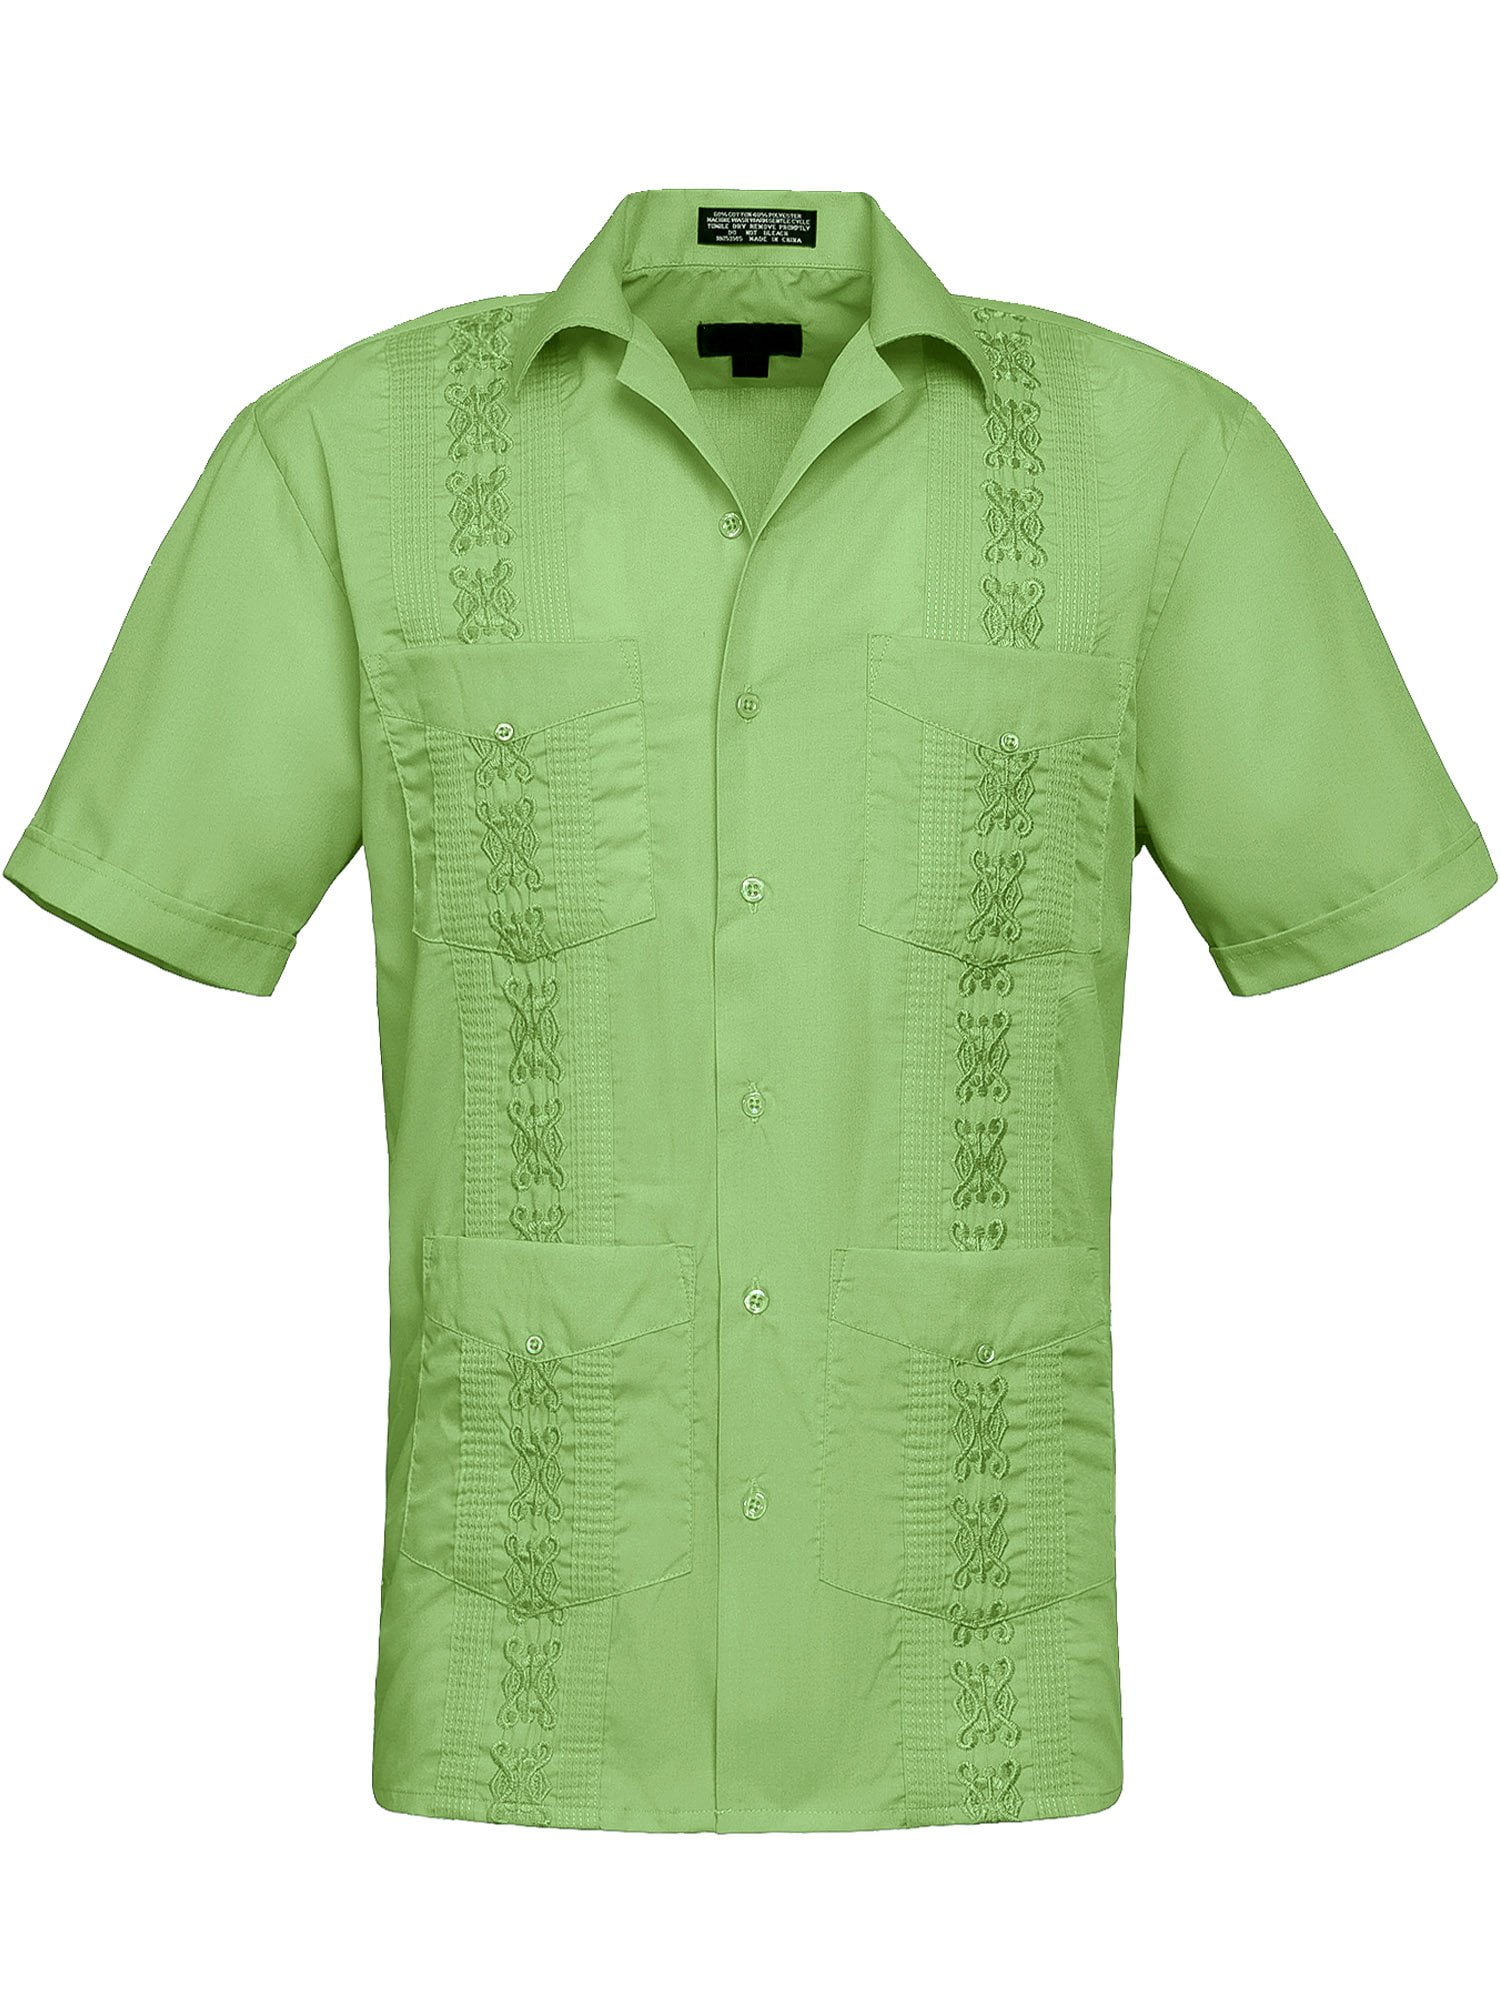 Men's Guayabera Premium Lightweight Embroidered Pleated Cuban Shirt 